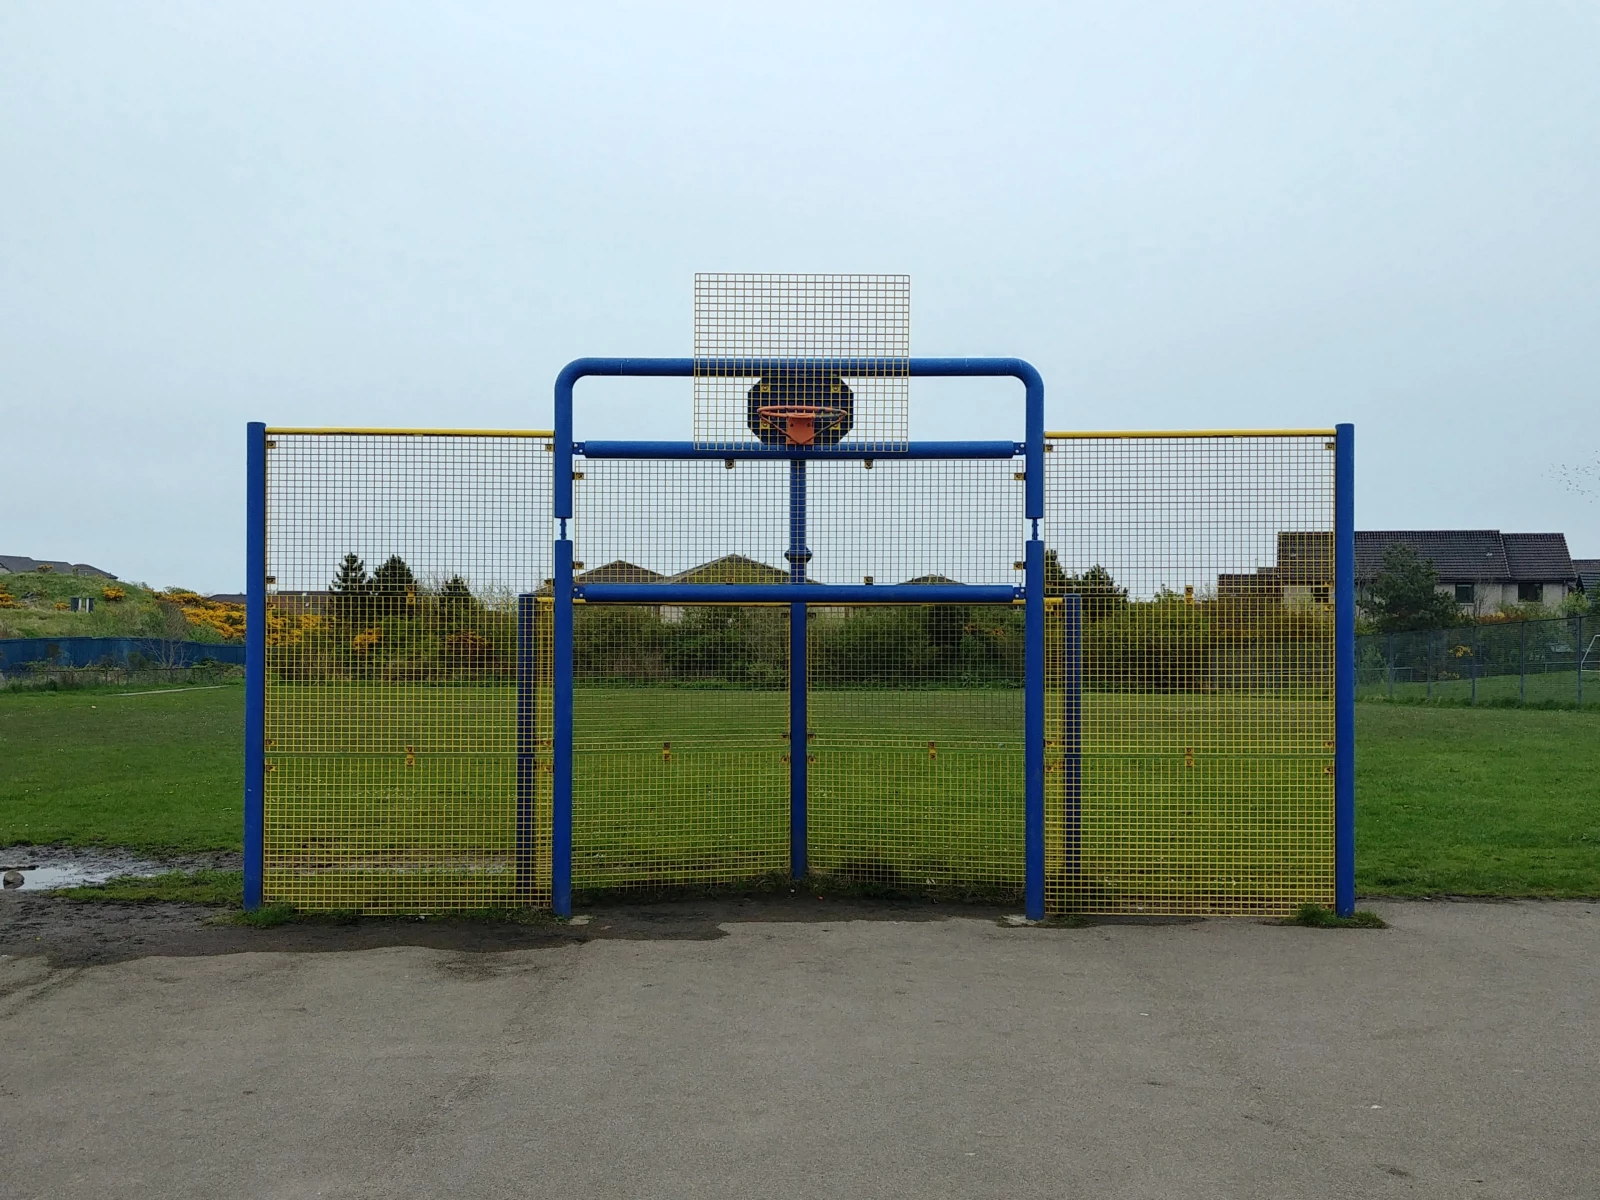 Aberdeen Basketball Court: Charleston School Court Courts of the World